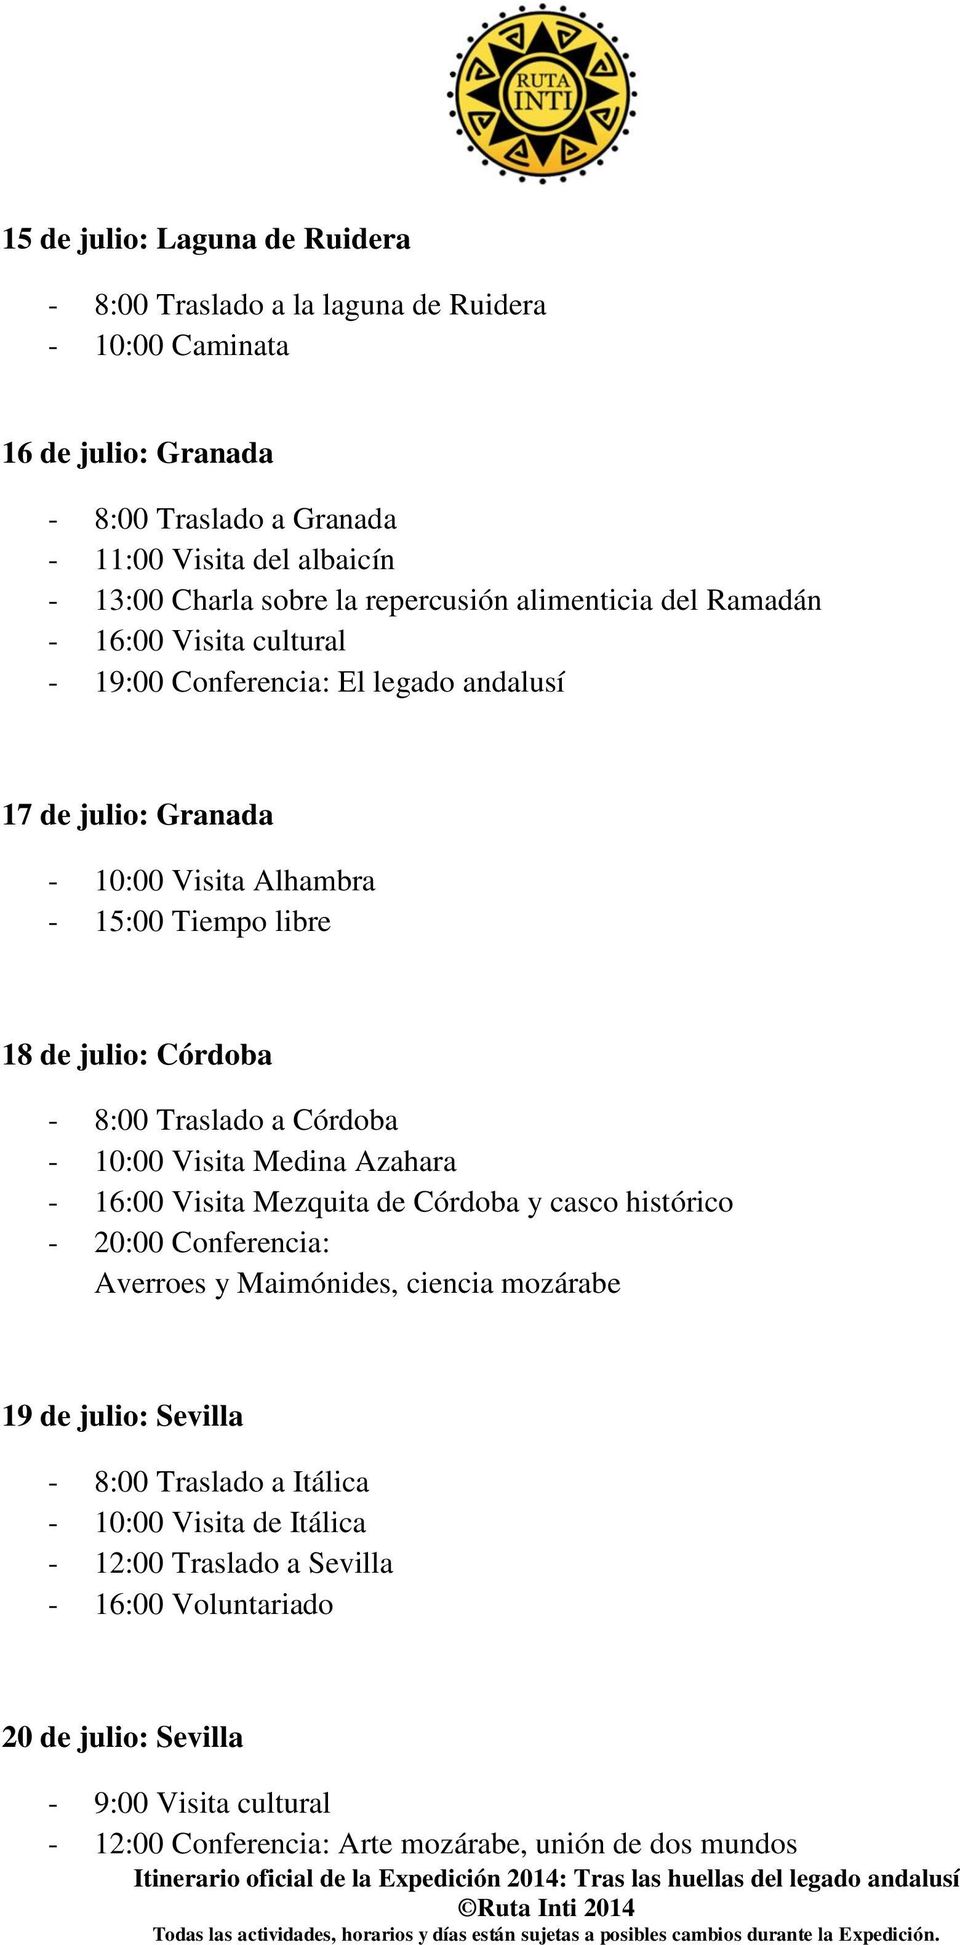 Córdoba - 8:00 Traslado a Córdoba - 10:00 Visita Medina Azahara - 16:00 Visita Mezquita de Córdoba y casco histórico - 20:00 Conferencia: Averroes y Maimónides, ciencia mozárabe 19 de